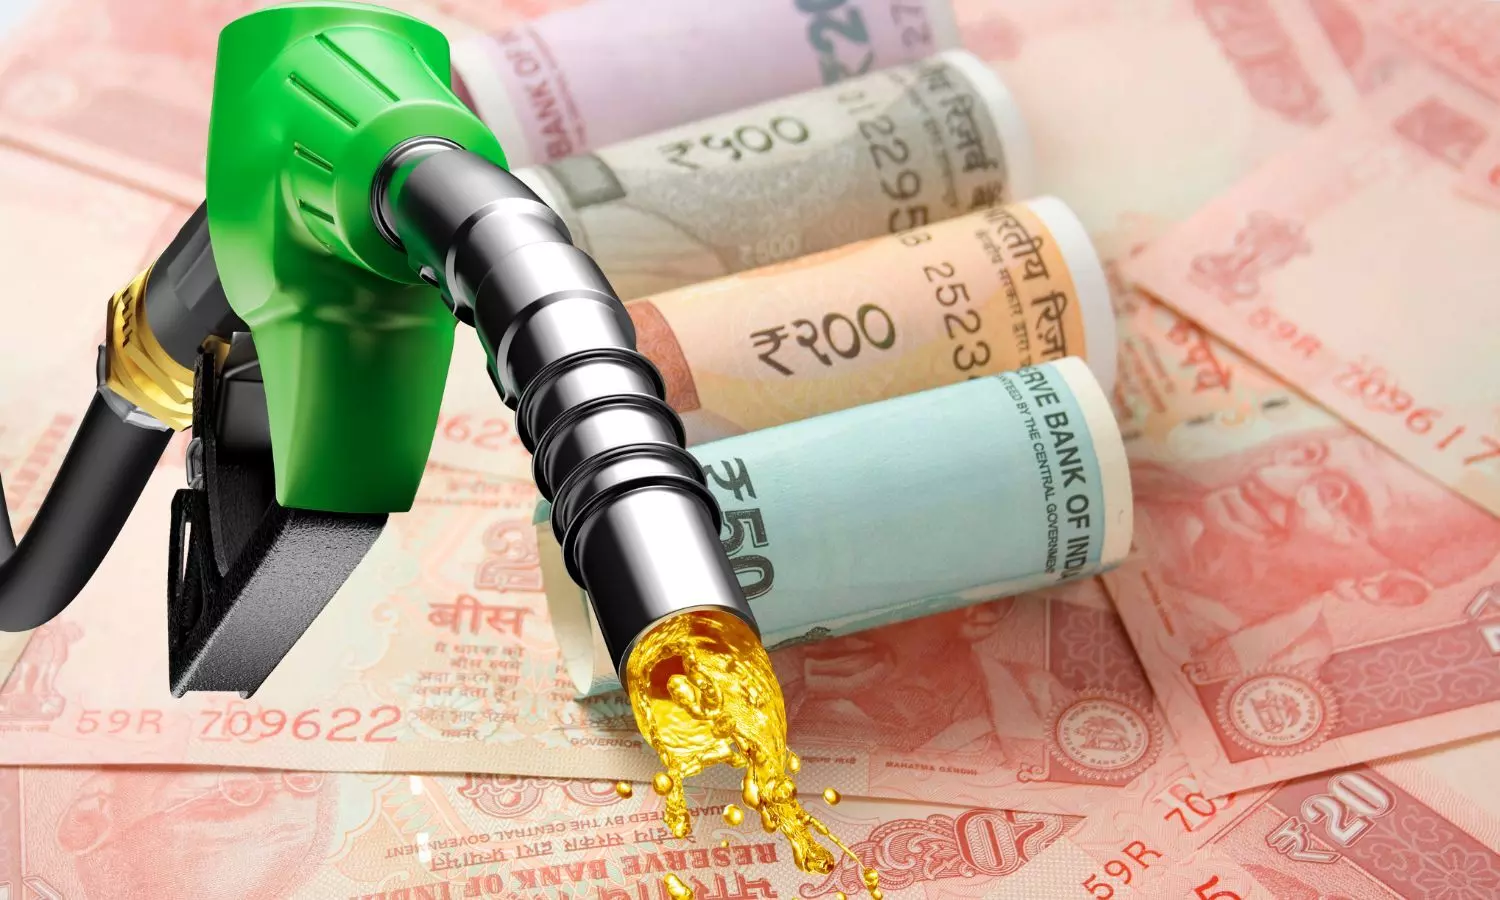 Petrol Nozzle, Indian Rupees